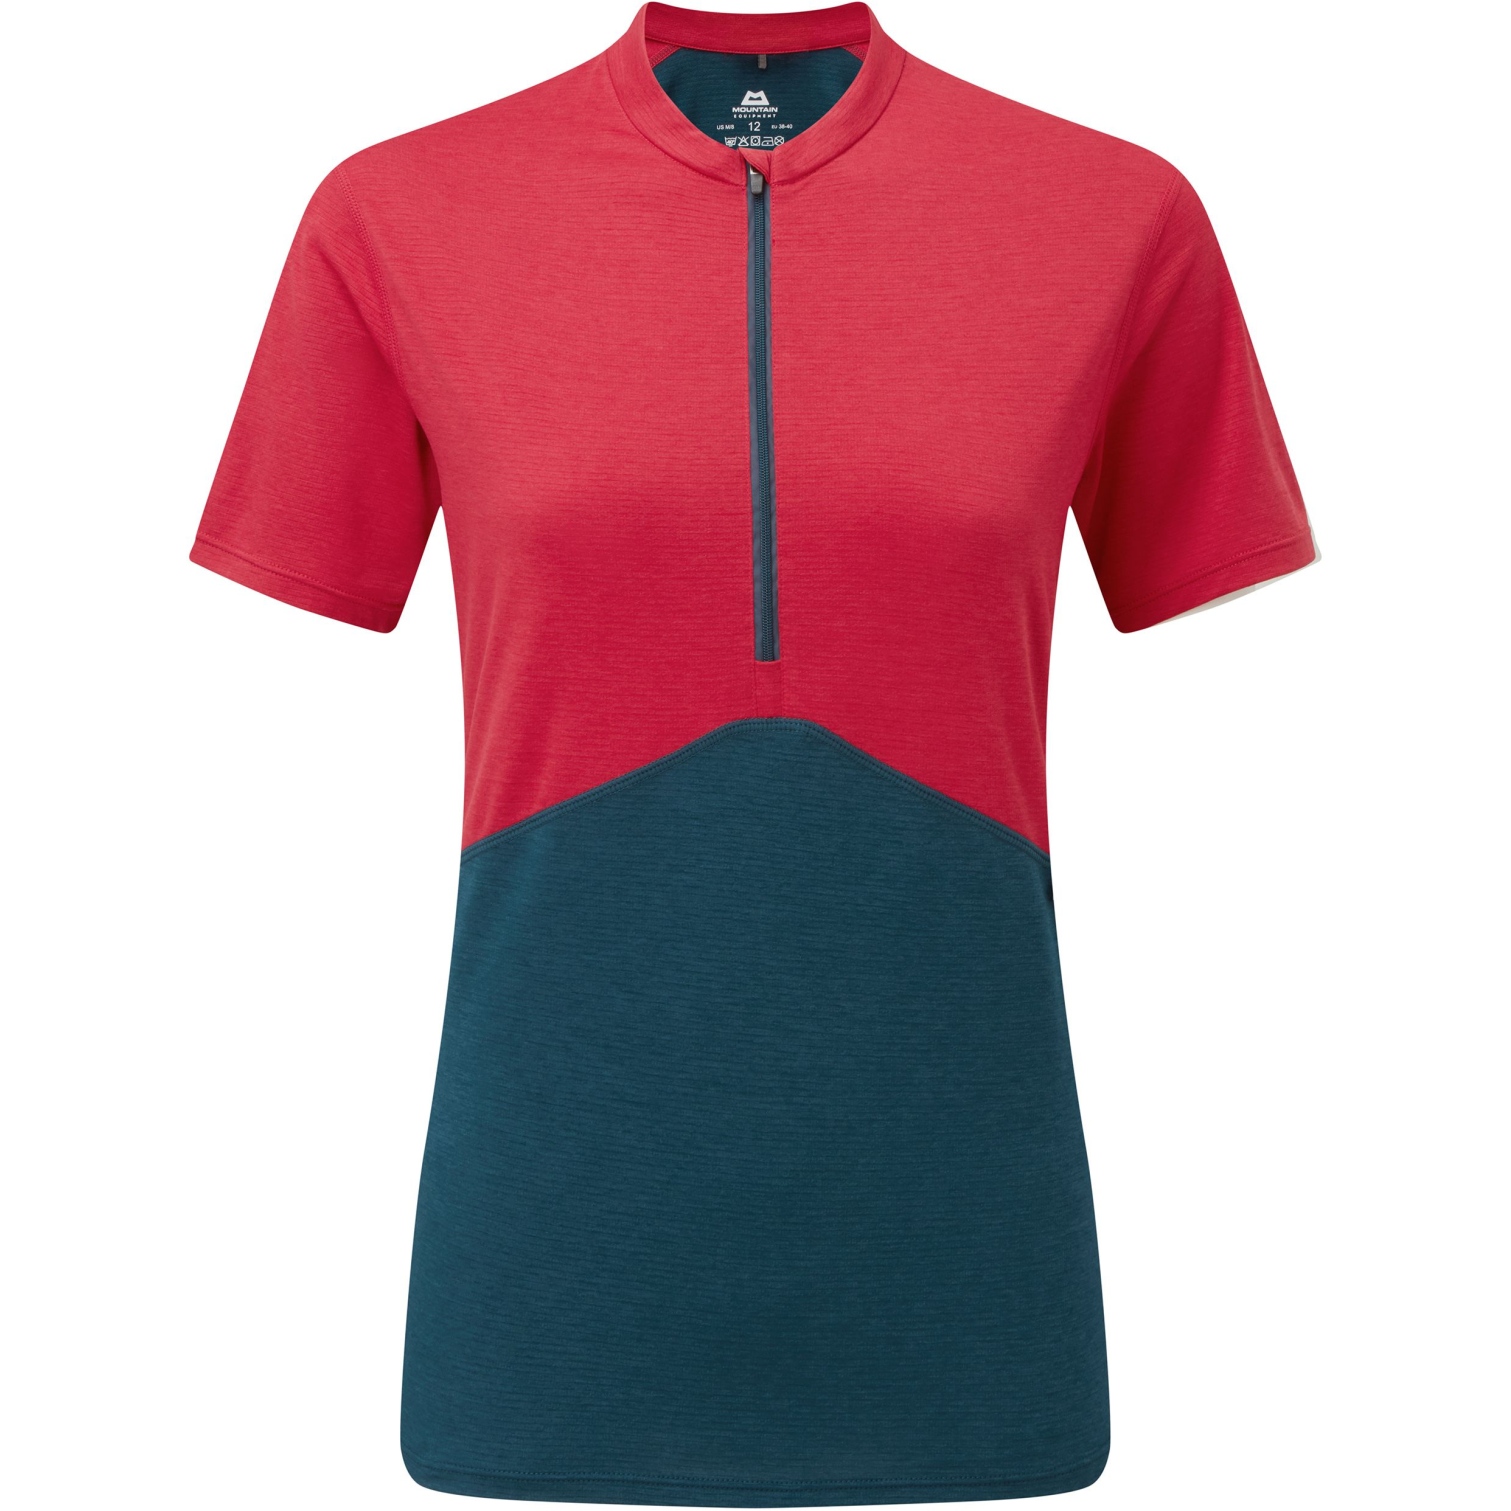 Produktbild von Mountain Equipment Nava Zip T Damen Kurzarm-Shirt ME-005994 - capsicum red/majolica blue